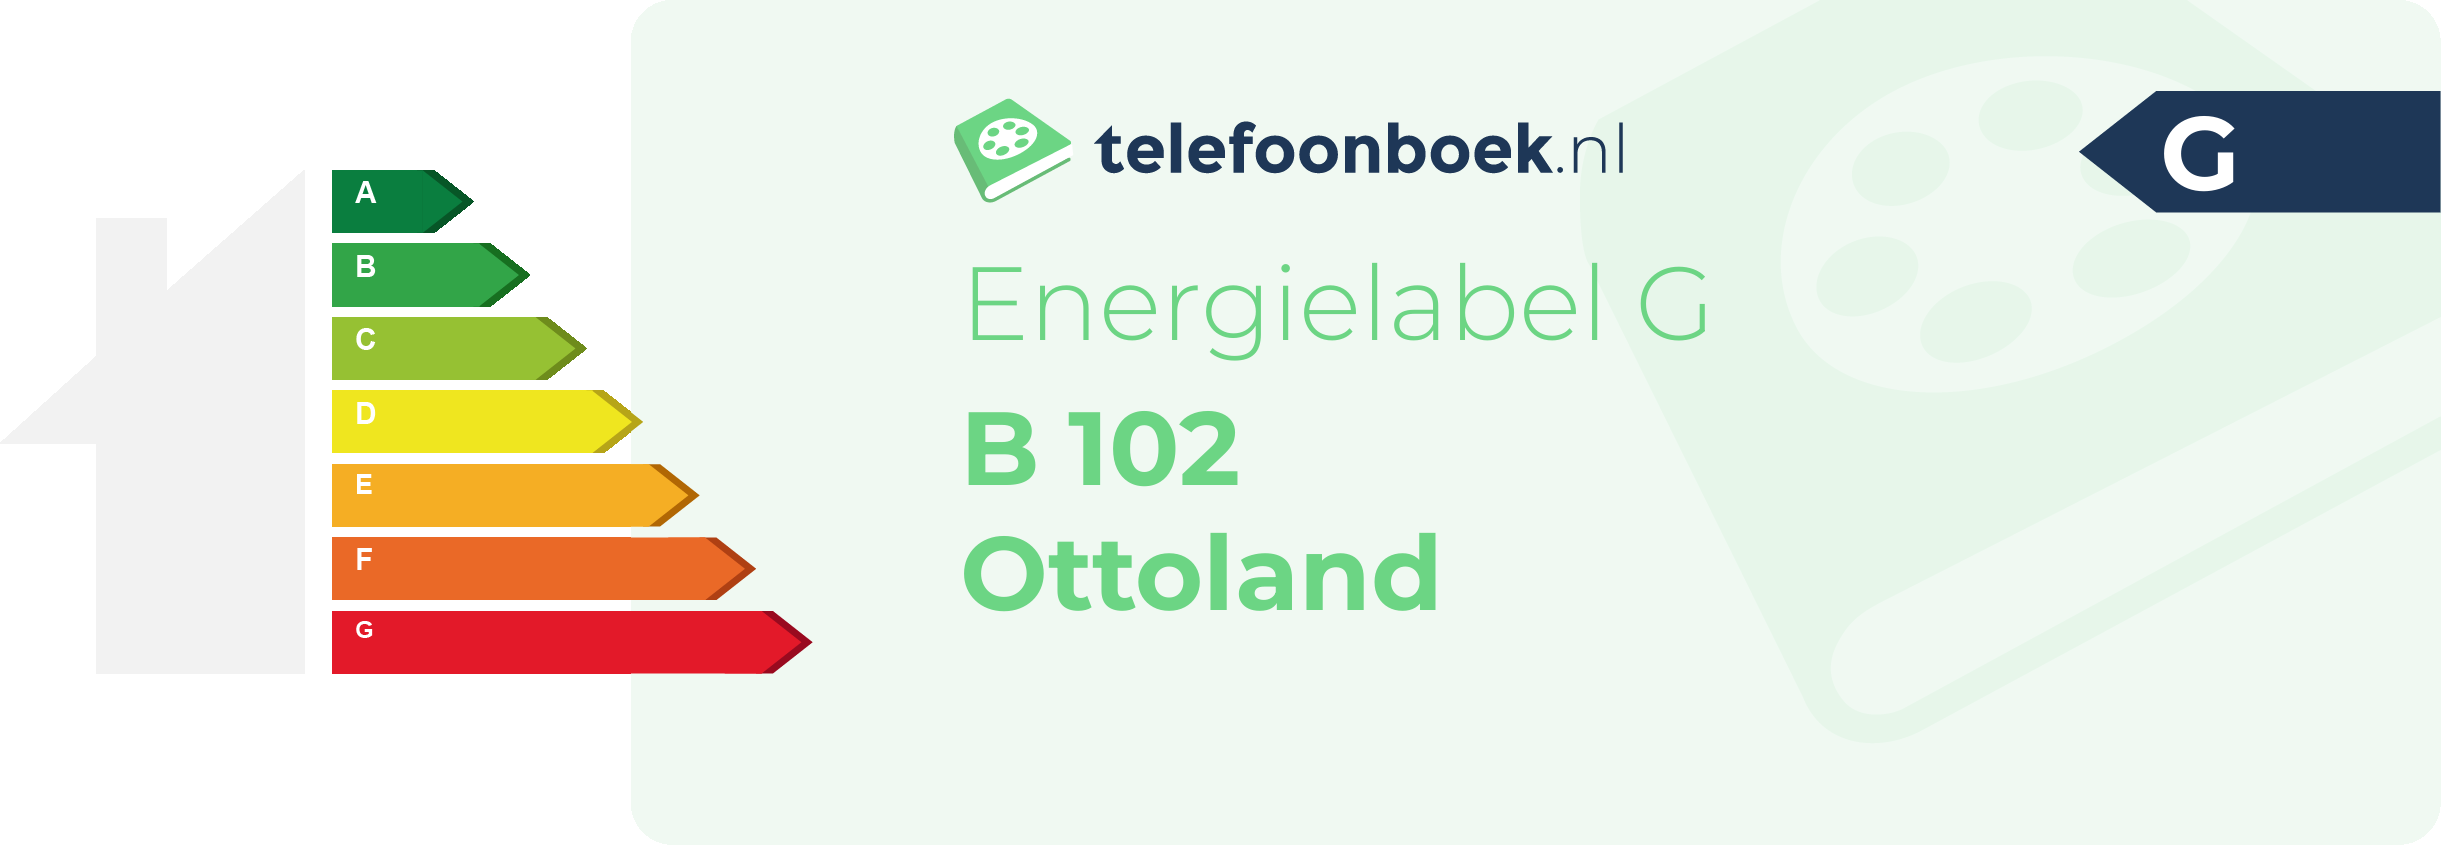 Energielabel B 102 Ottoland